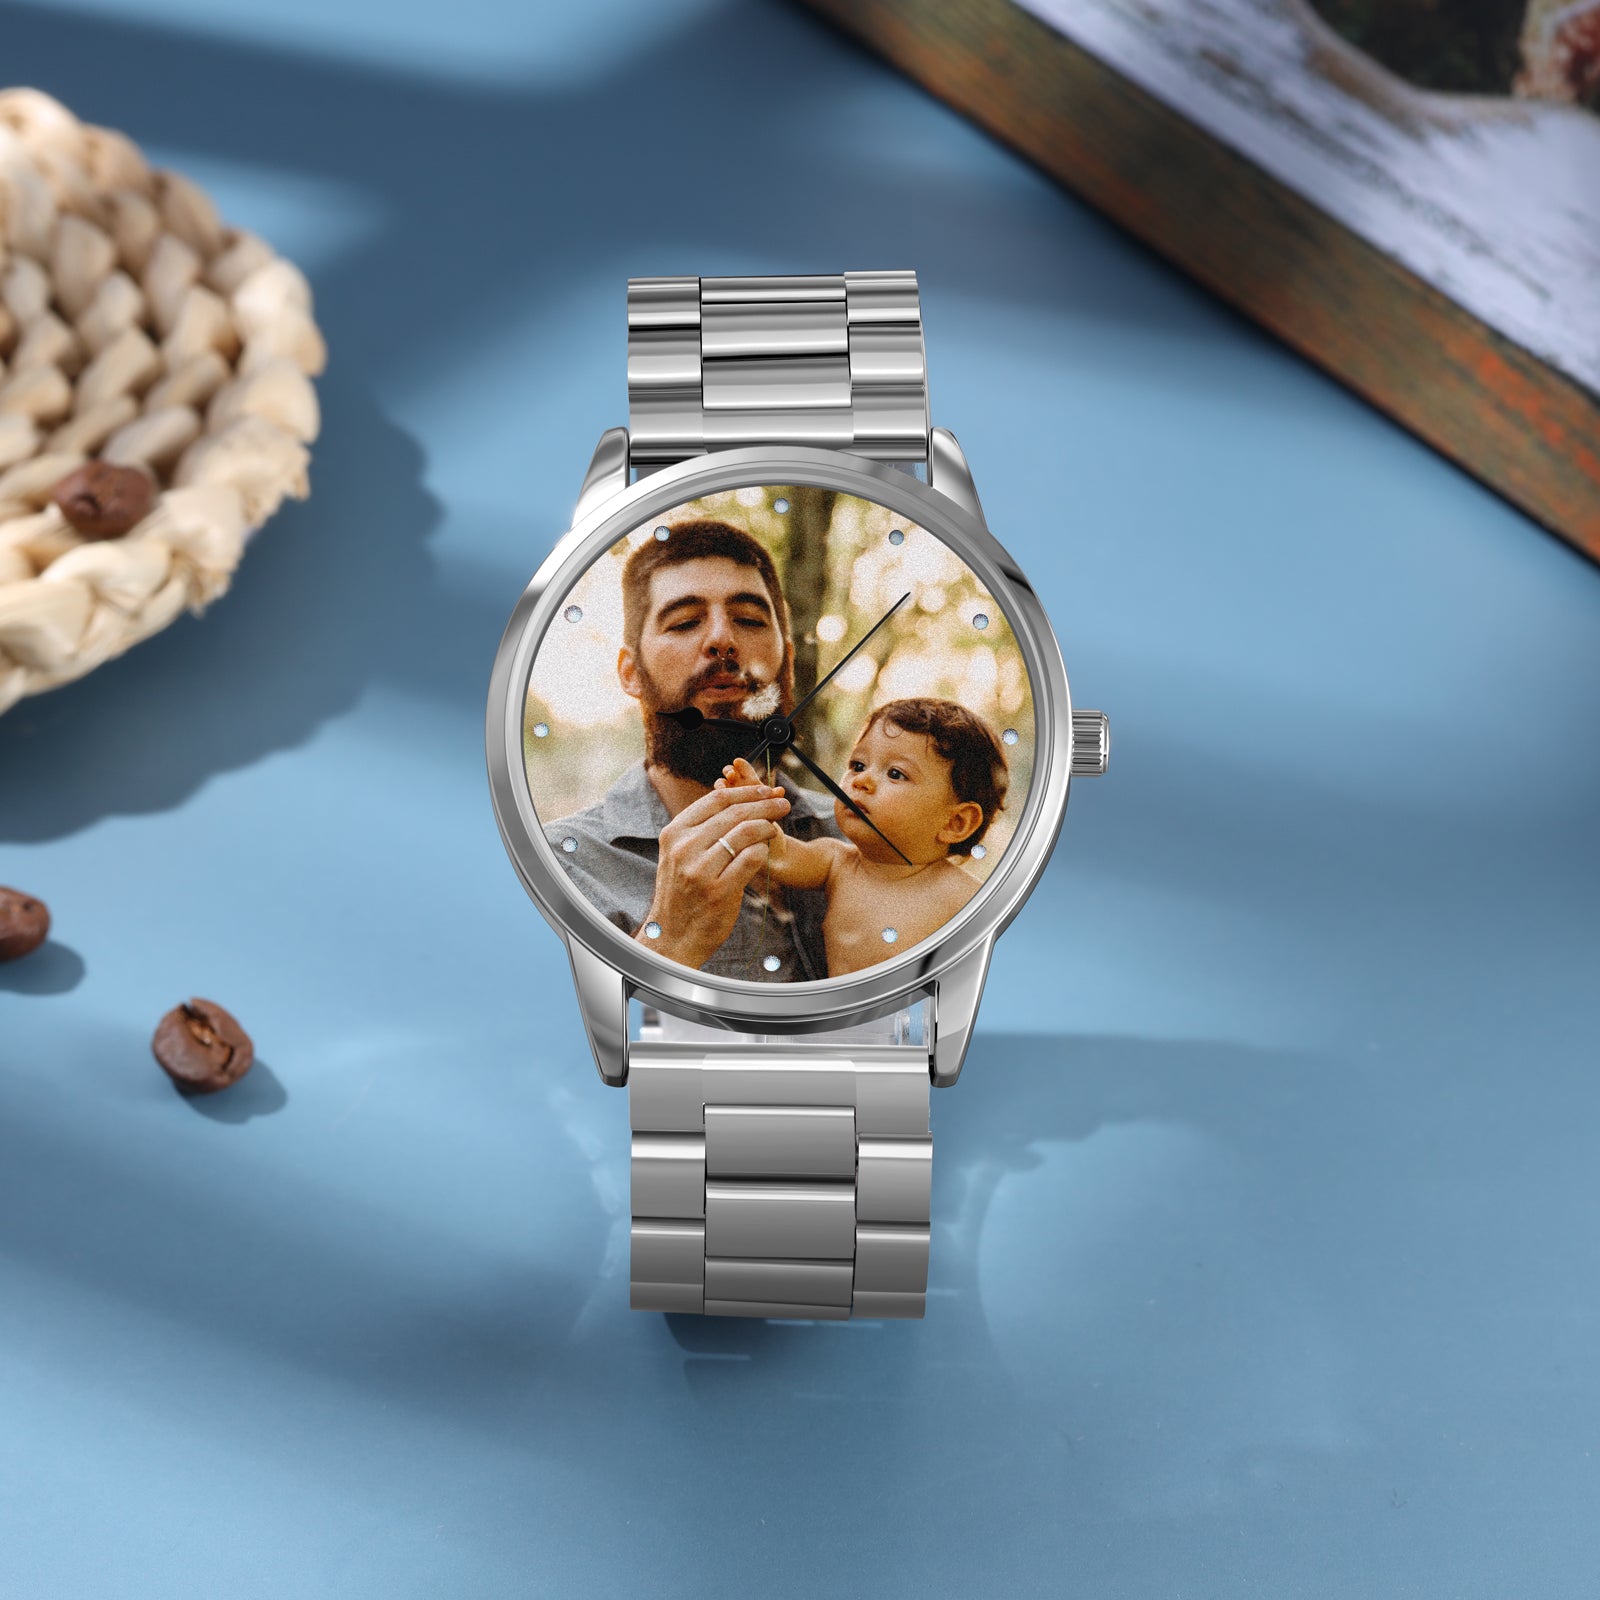 ThinkEngraved Custom watch Custom Company or Business Logo Watch Personalized Watch